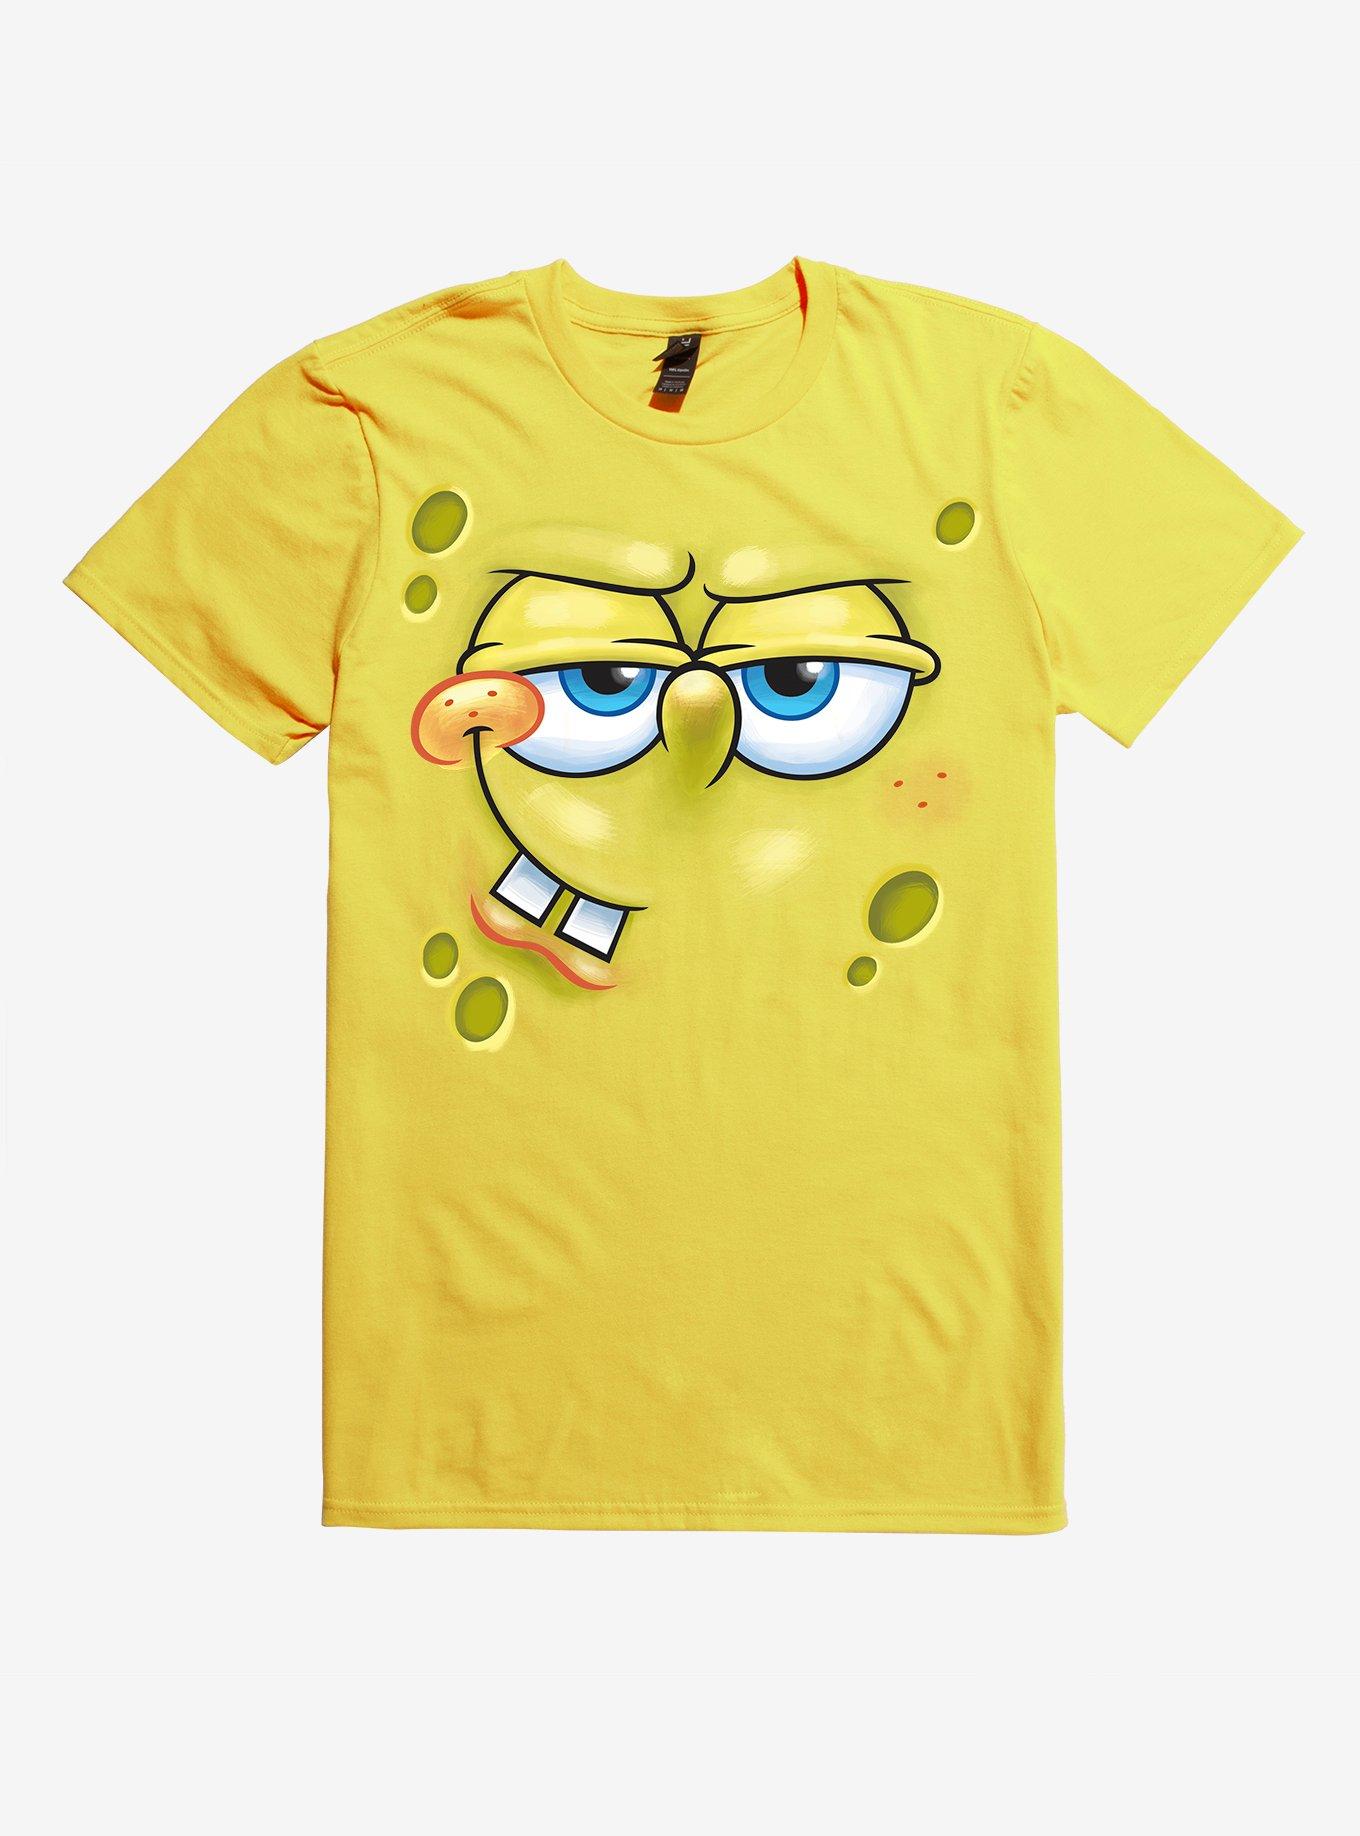 spongebob confused face